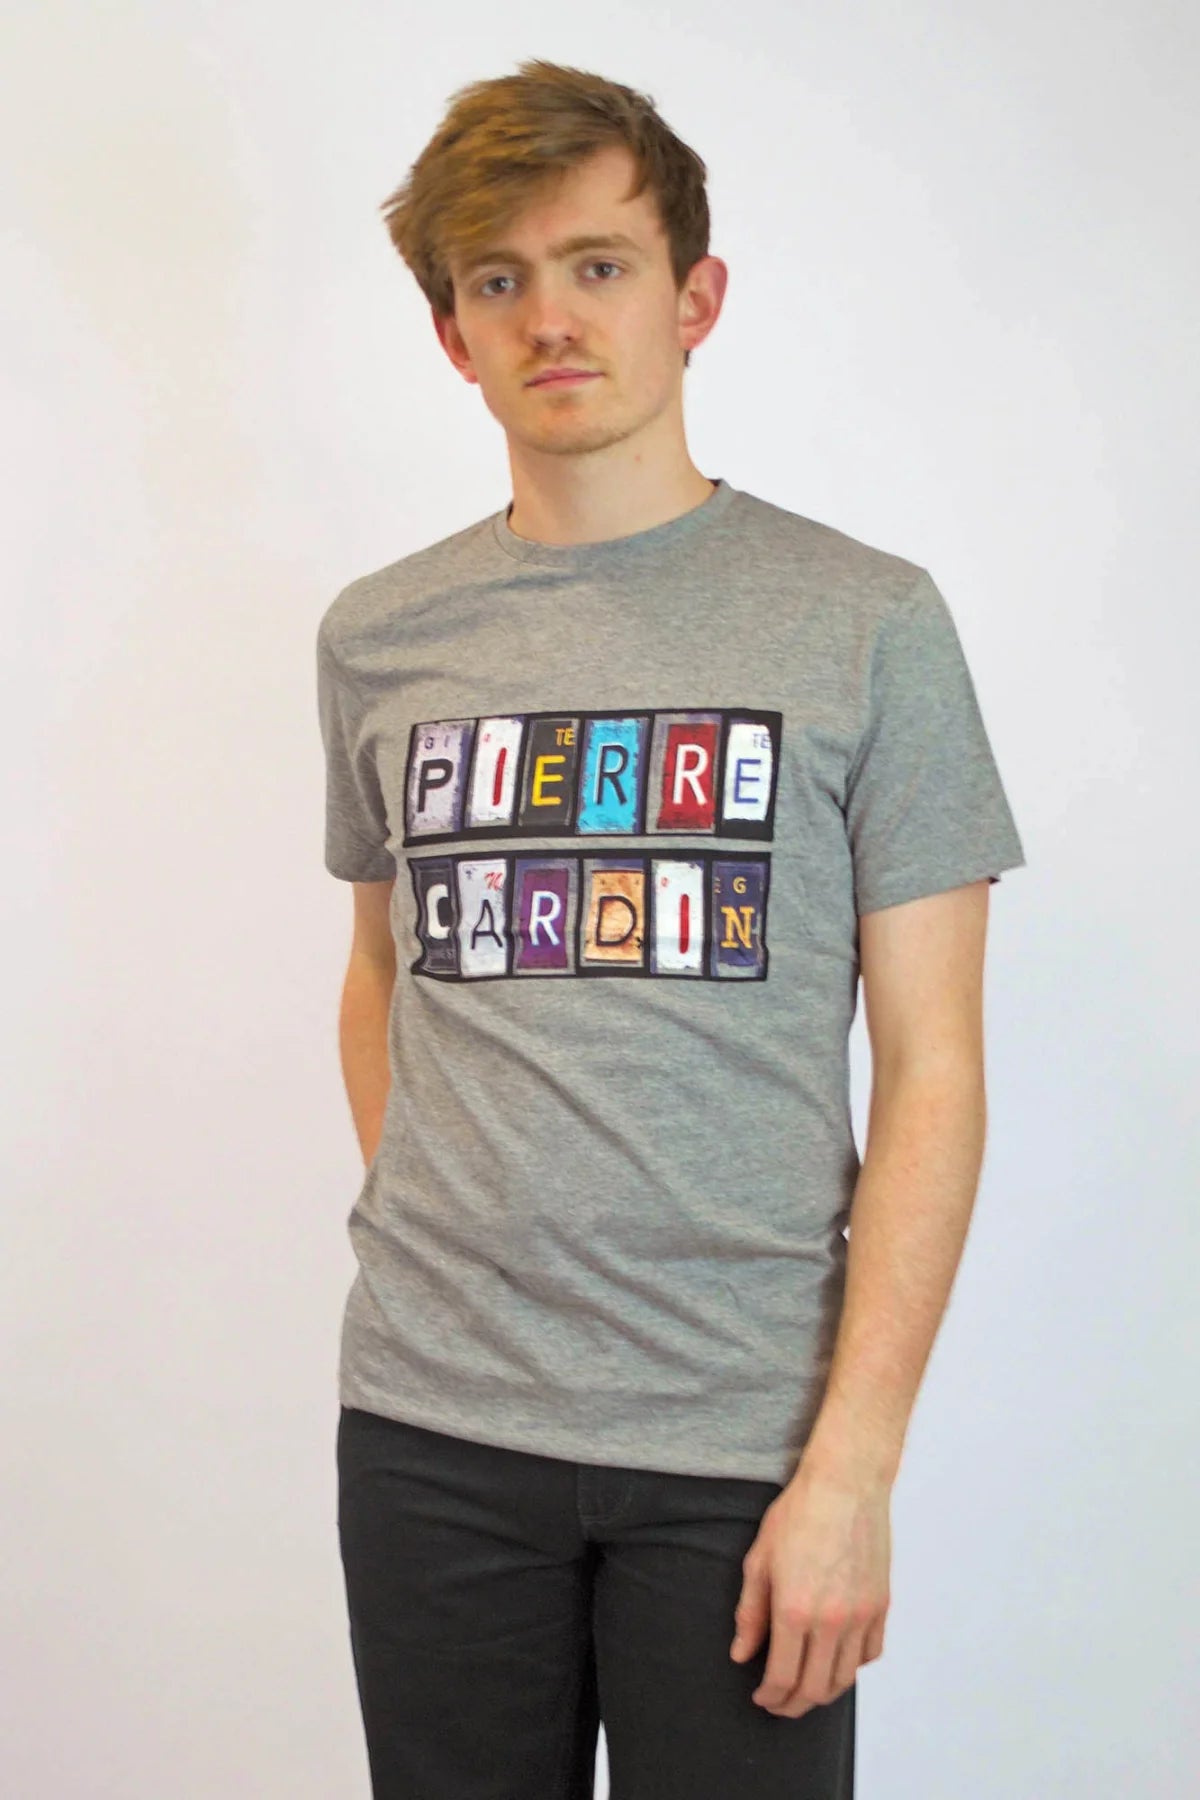 Pierre Cardin Graphic T Shirt Grey / S